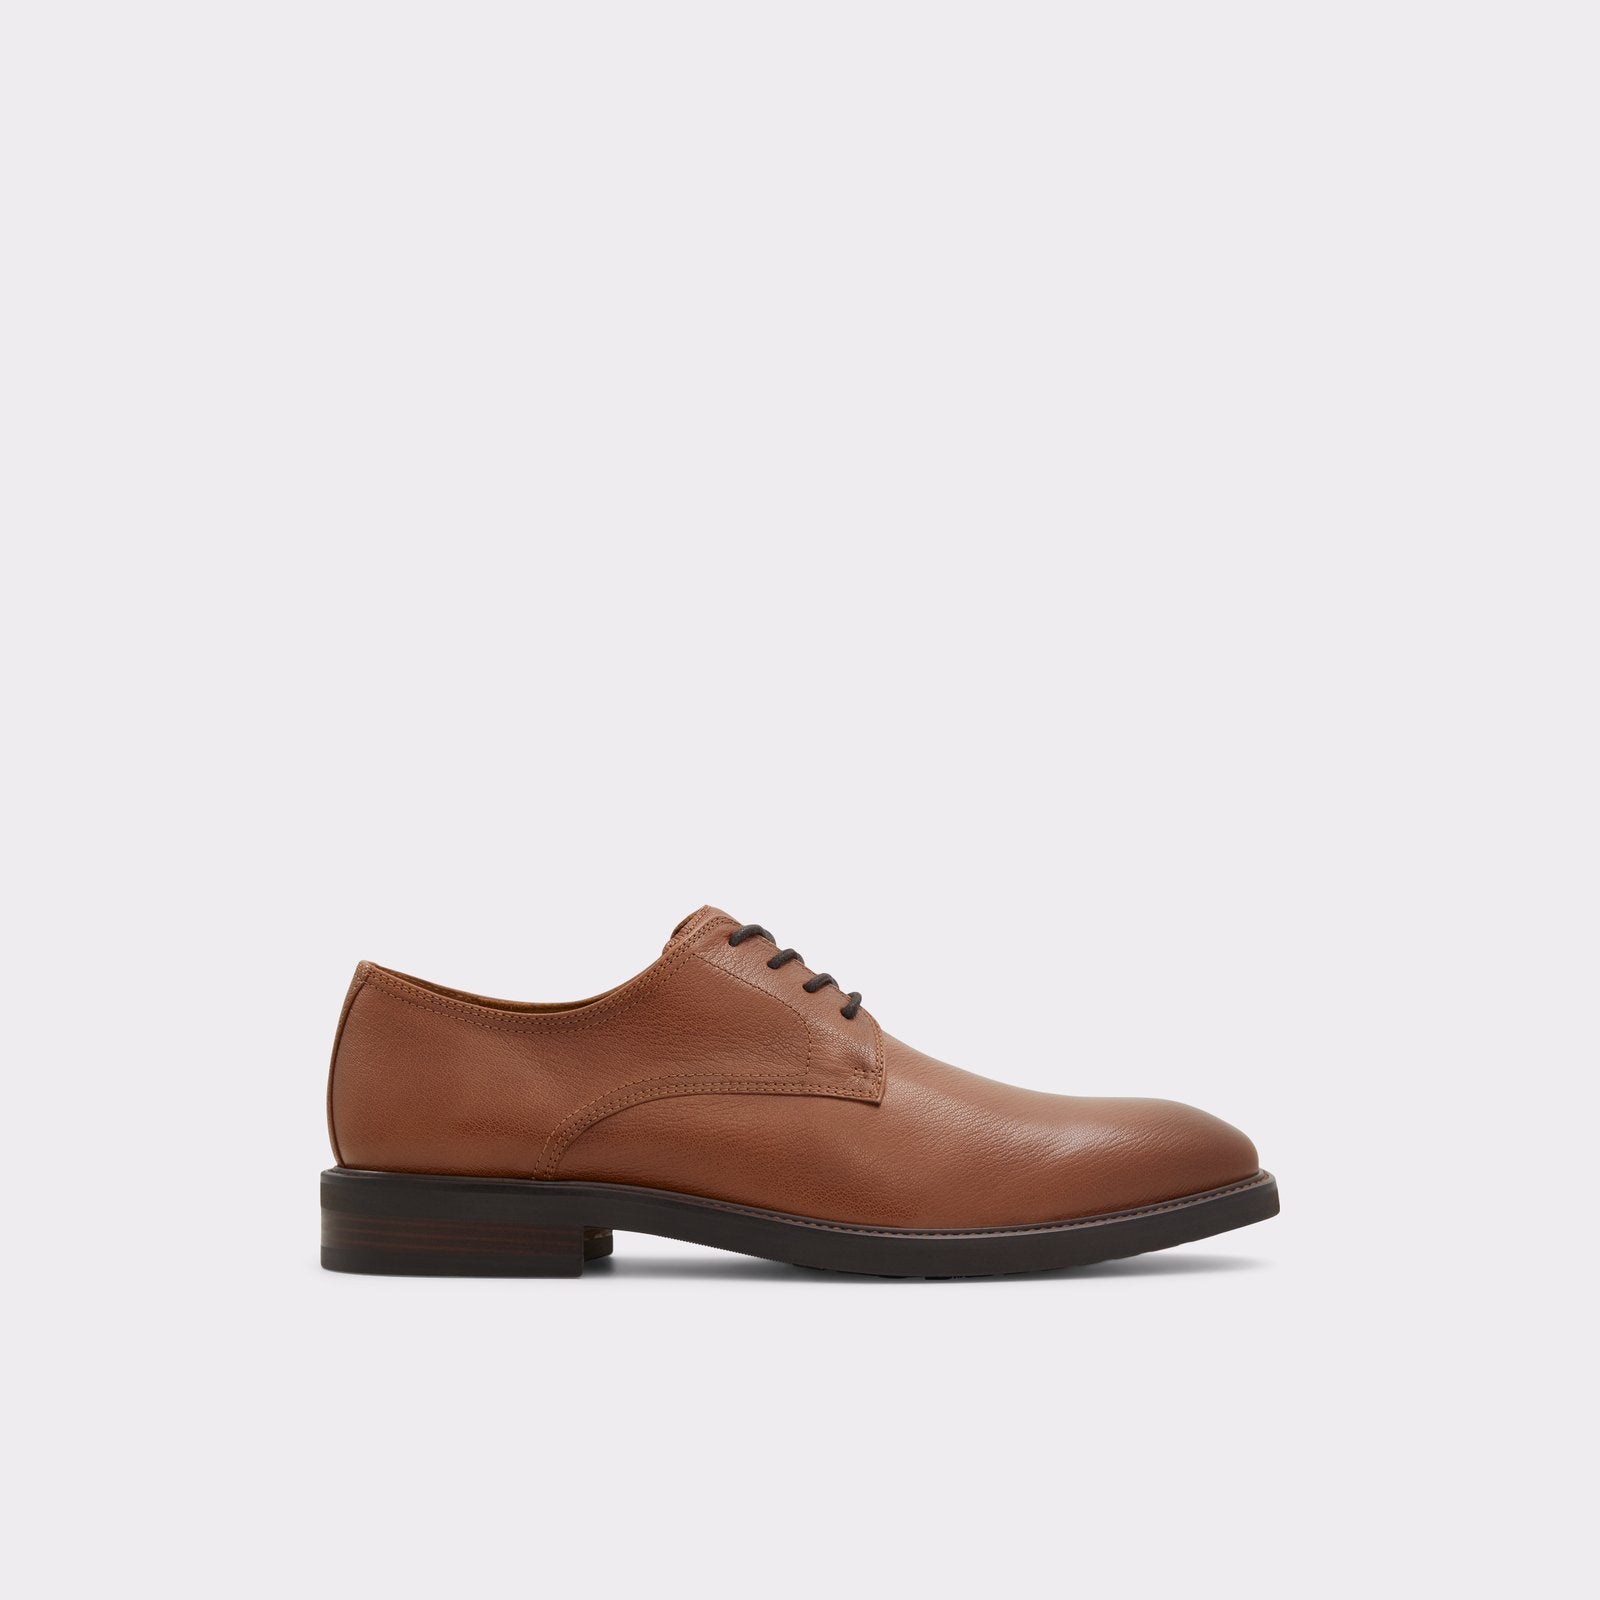 Aldo Men’s Oxford Shoes Blandford (Cognac)